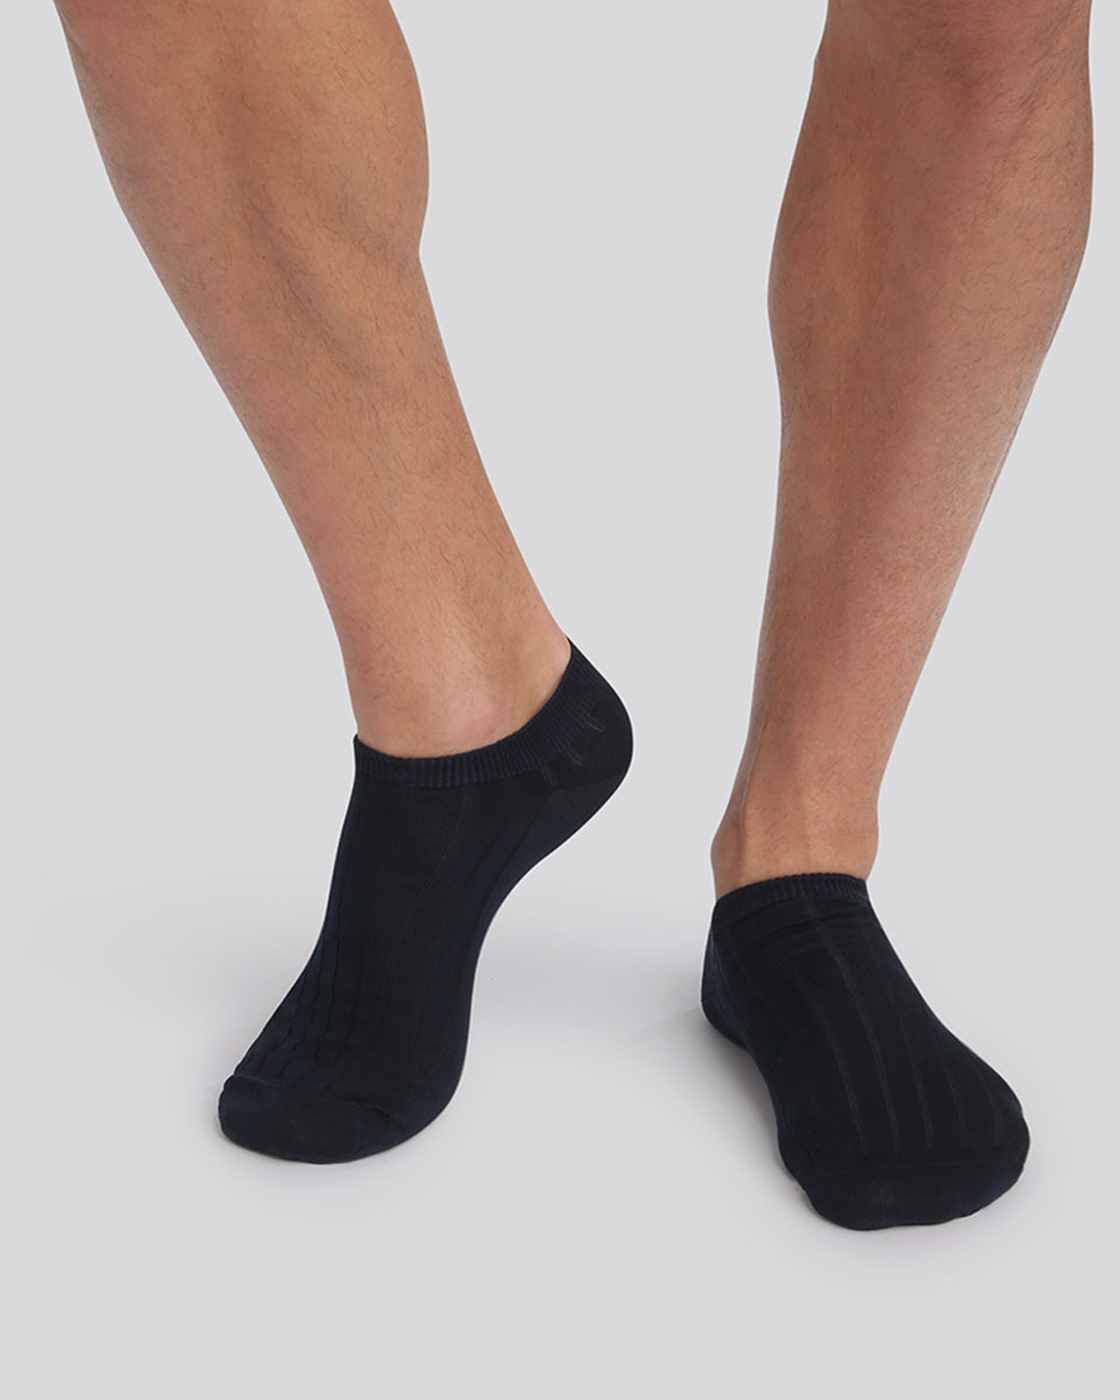 Короткие черные носки. Носки Livergy socquettes homme. Мужские носки Nike 2 pairs. Носки мужские следки Zenden. Носки 06k2, набор из 2 пар Dim.